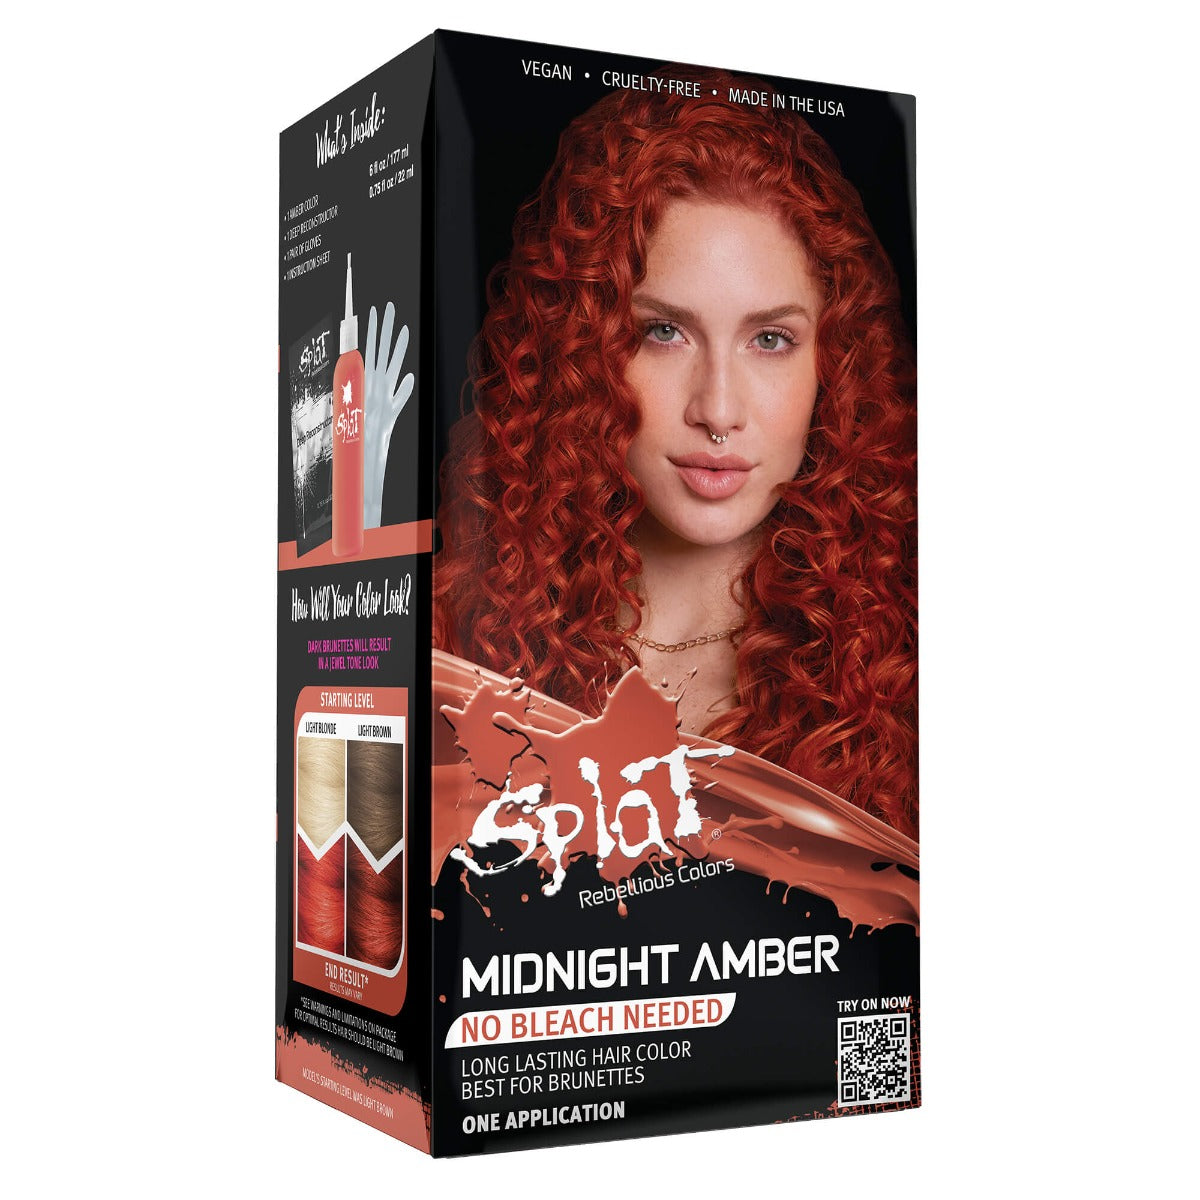 A box of Splat Hair Color's Midnigh Amber Hair Dye